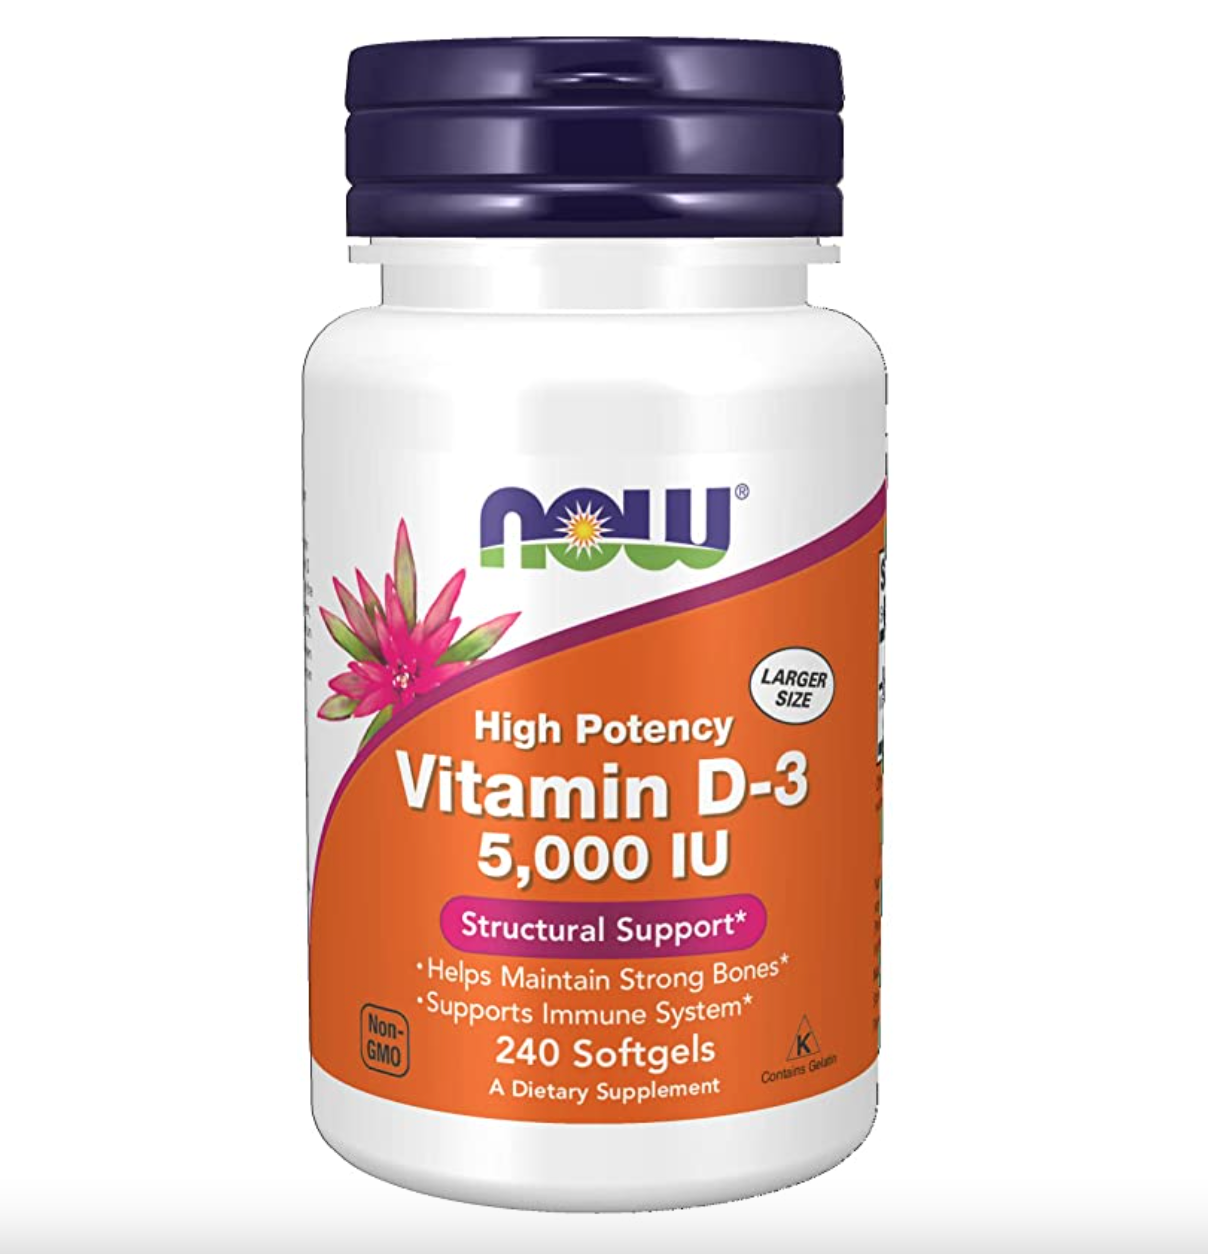 High Potency Vitamin D-3 